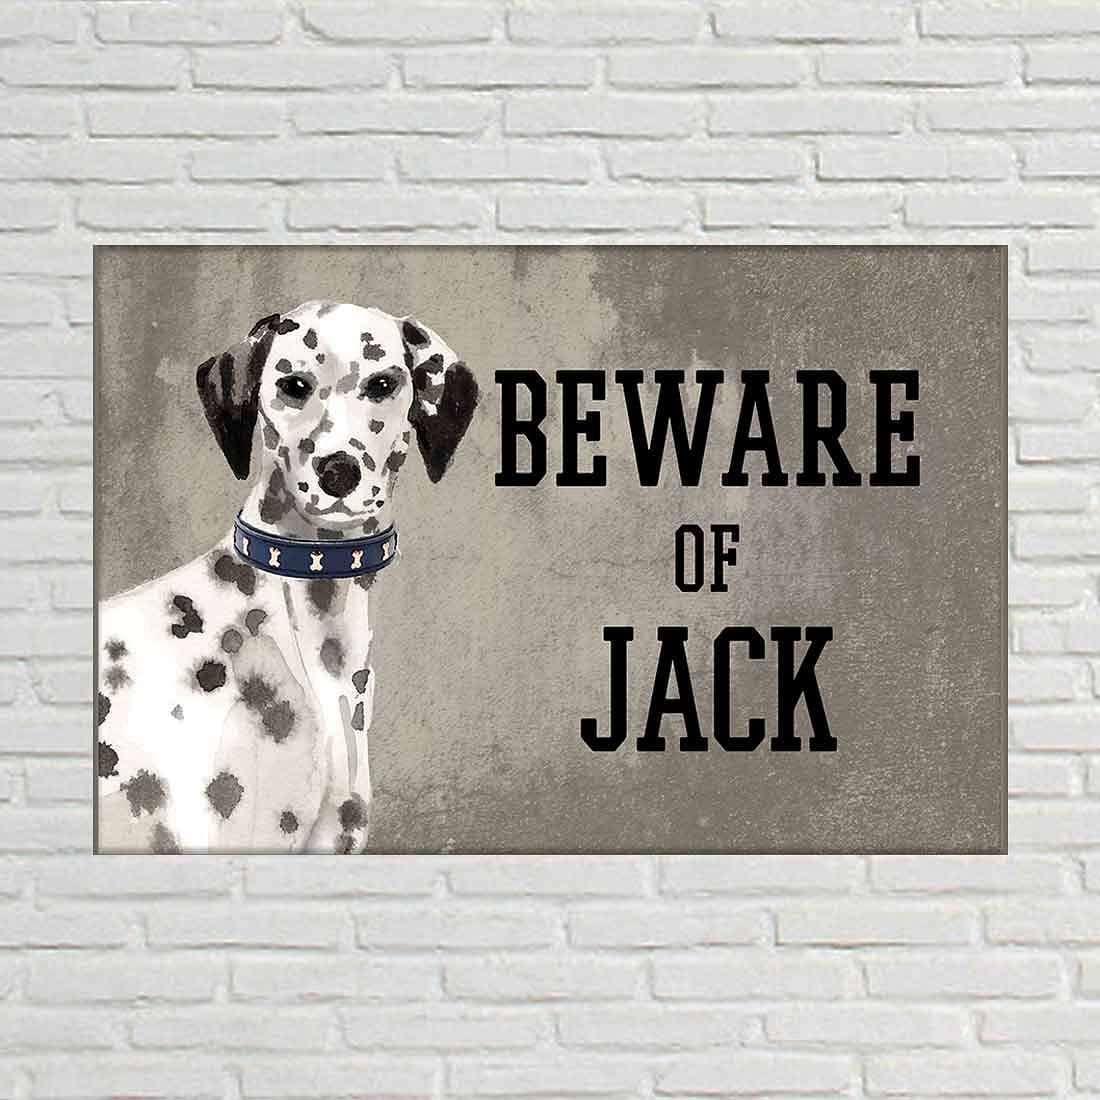 Personalized Dog Name Plates Beware Of Dog Sign - Dalmatian Nutcase